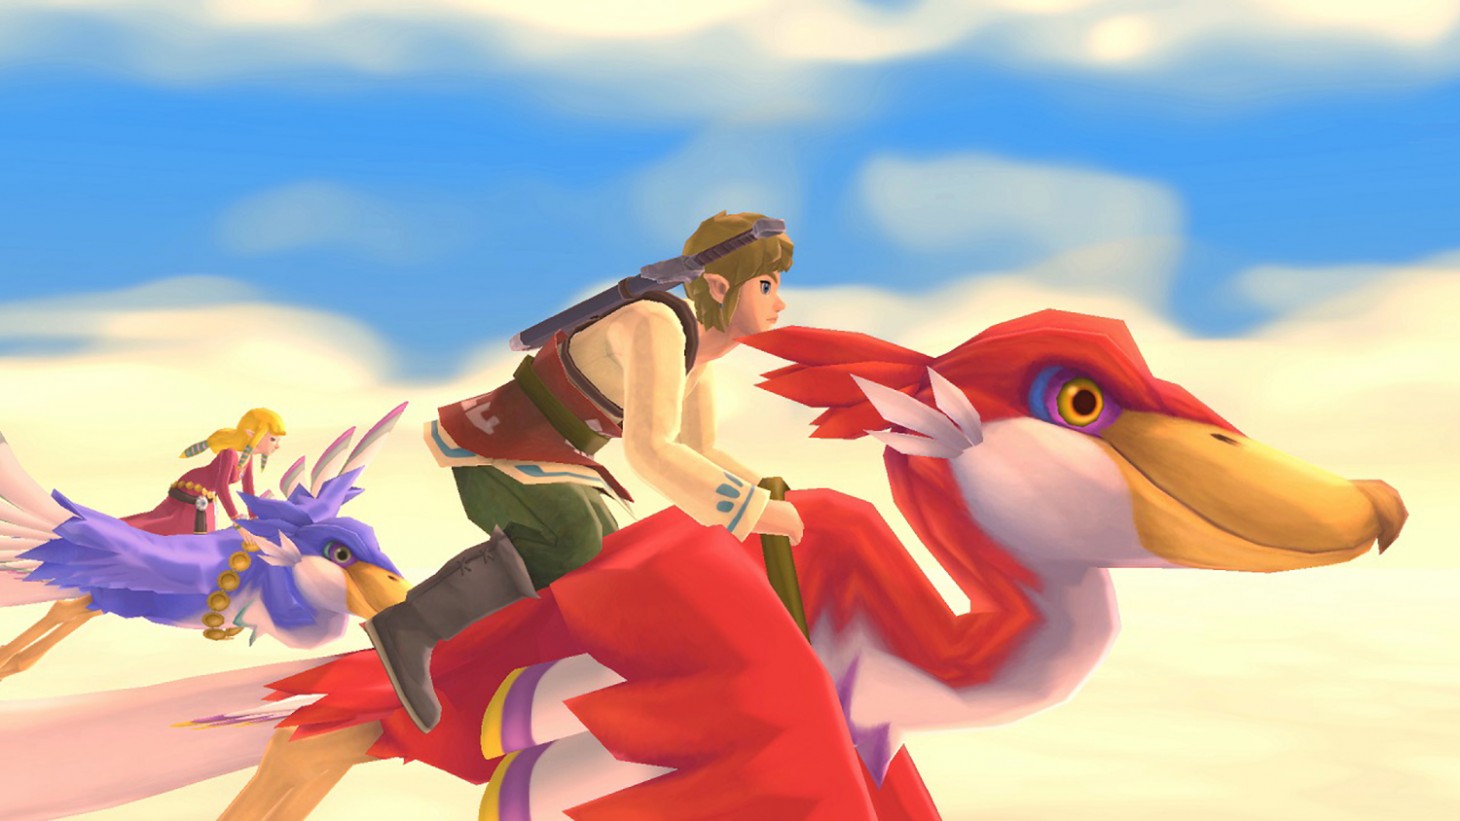 Zelda: Skyward Sword HD Coming To The Nintendo Switch In July